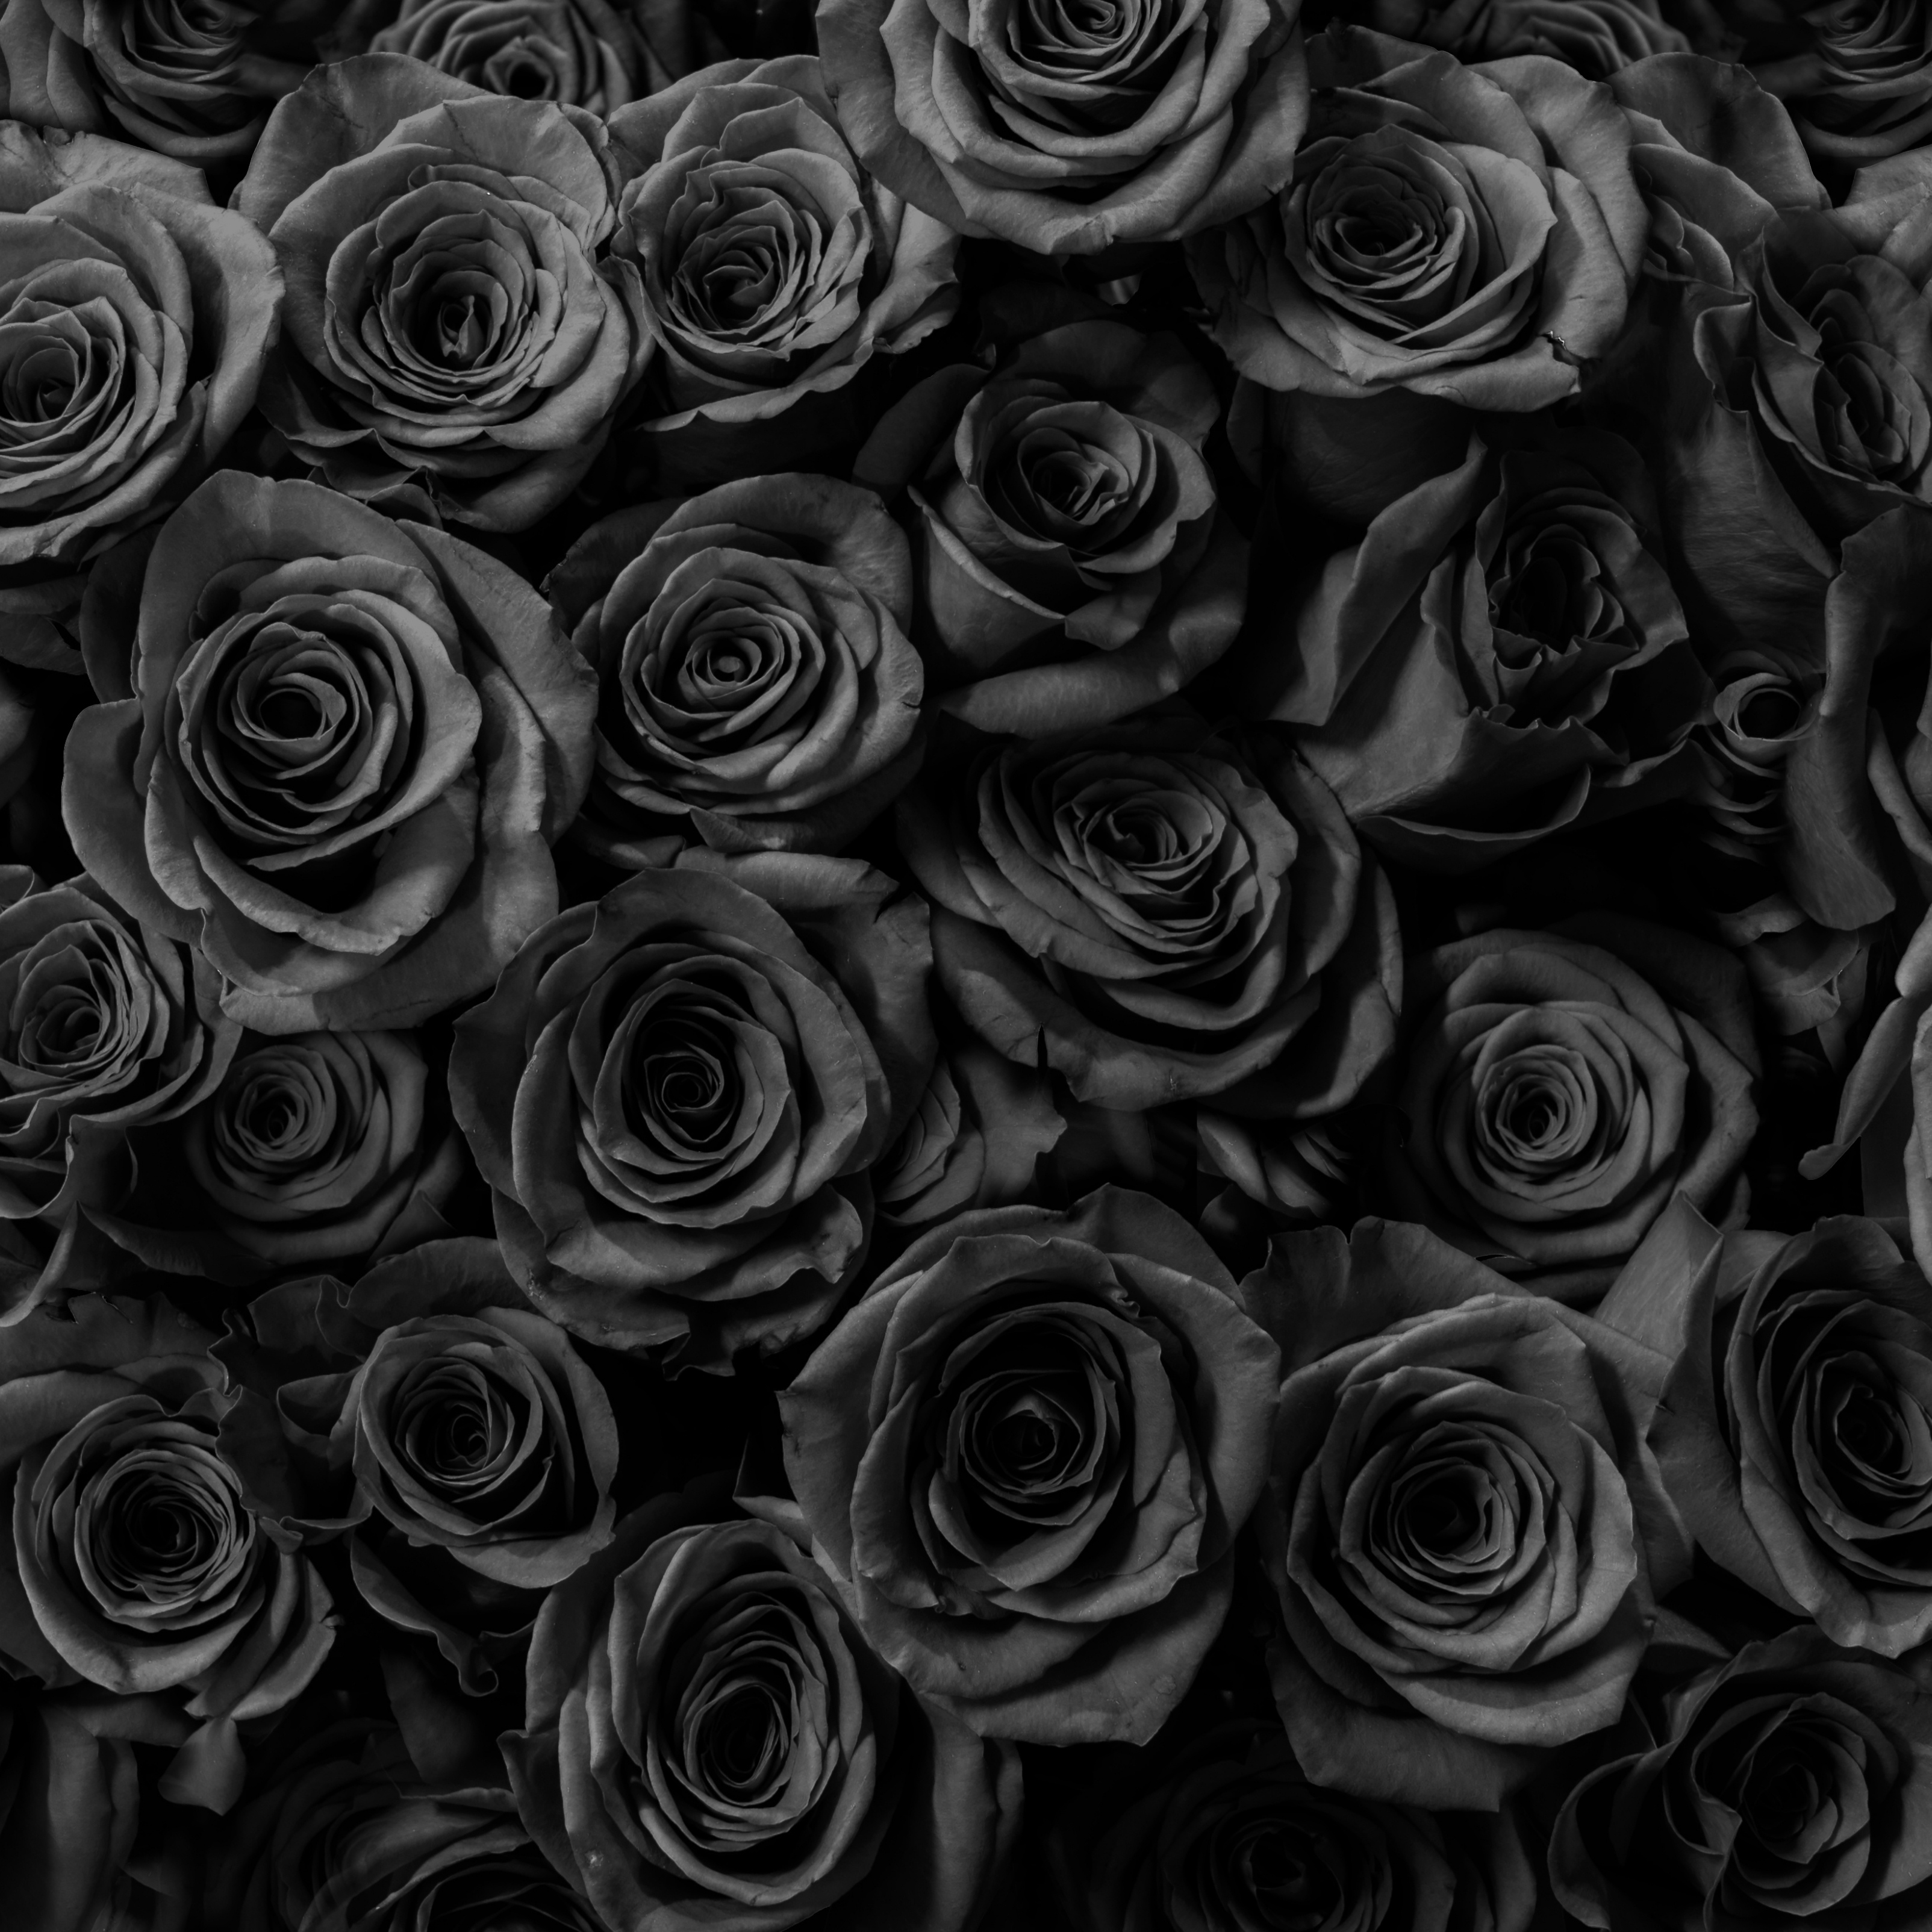 iPad Wallpapers Black Roses Gift Anniversary iPad Wallpaper 3208x3208 px